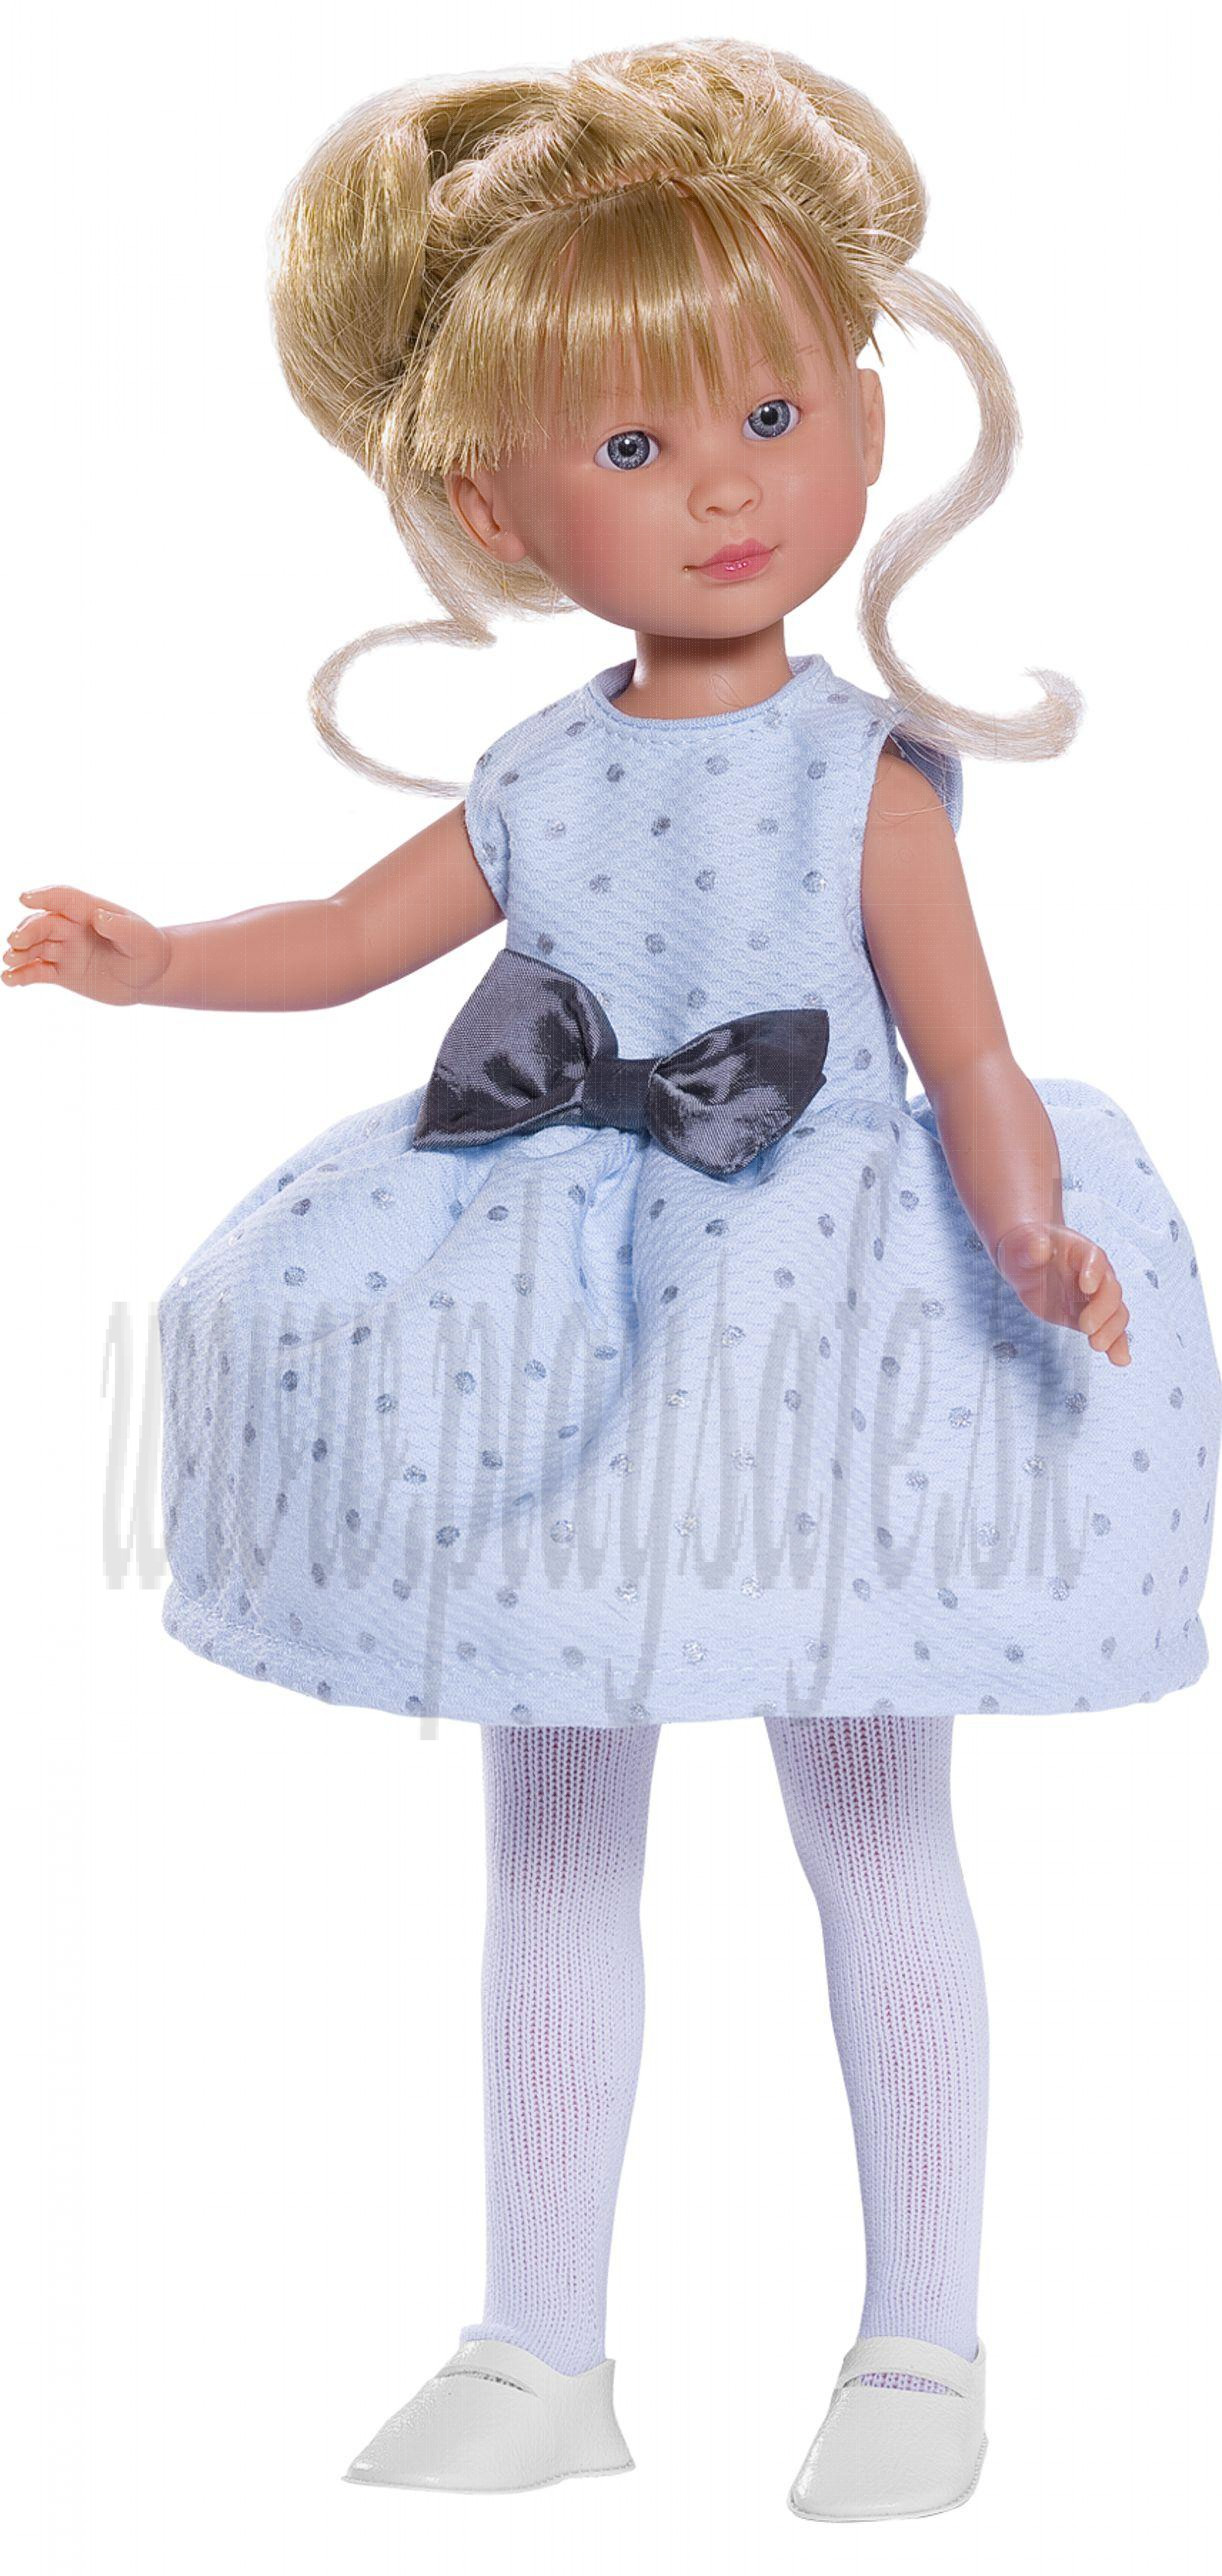 Asivil Celia Blonde Doll, 30cm in summer dress